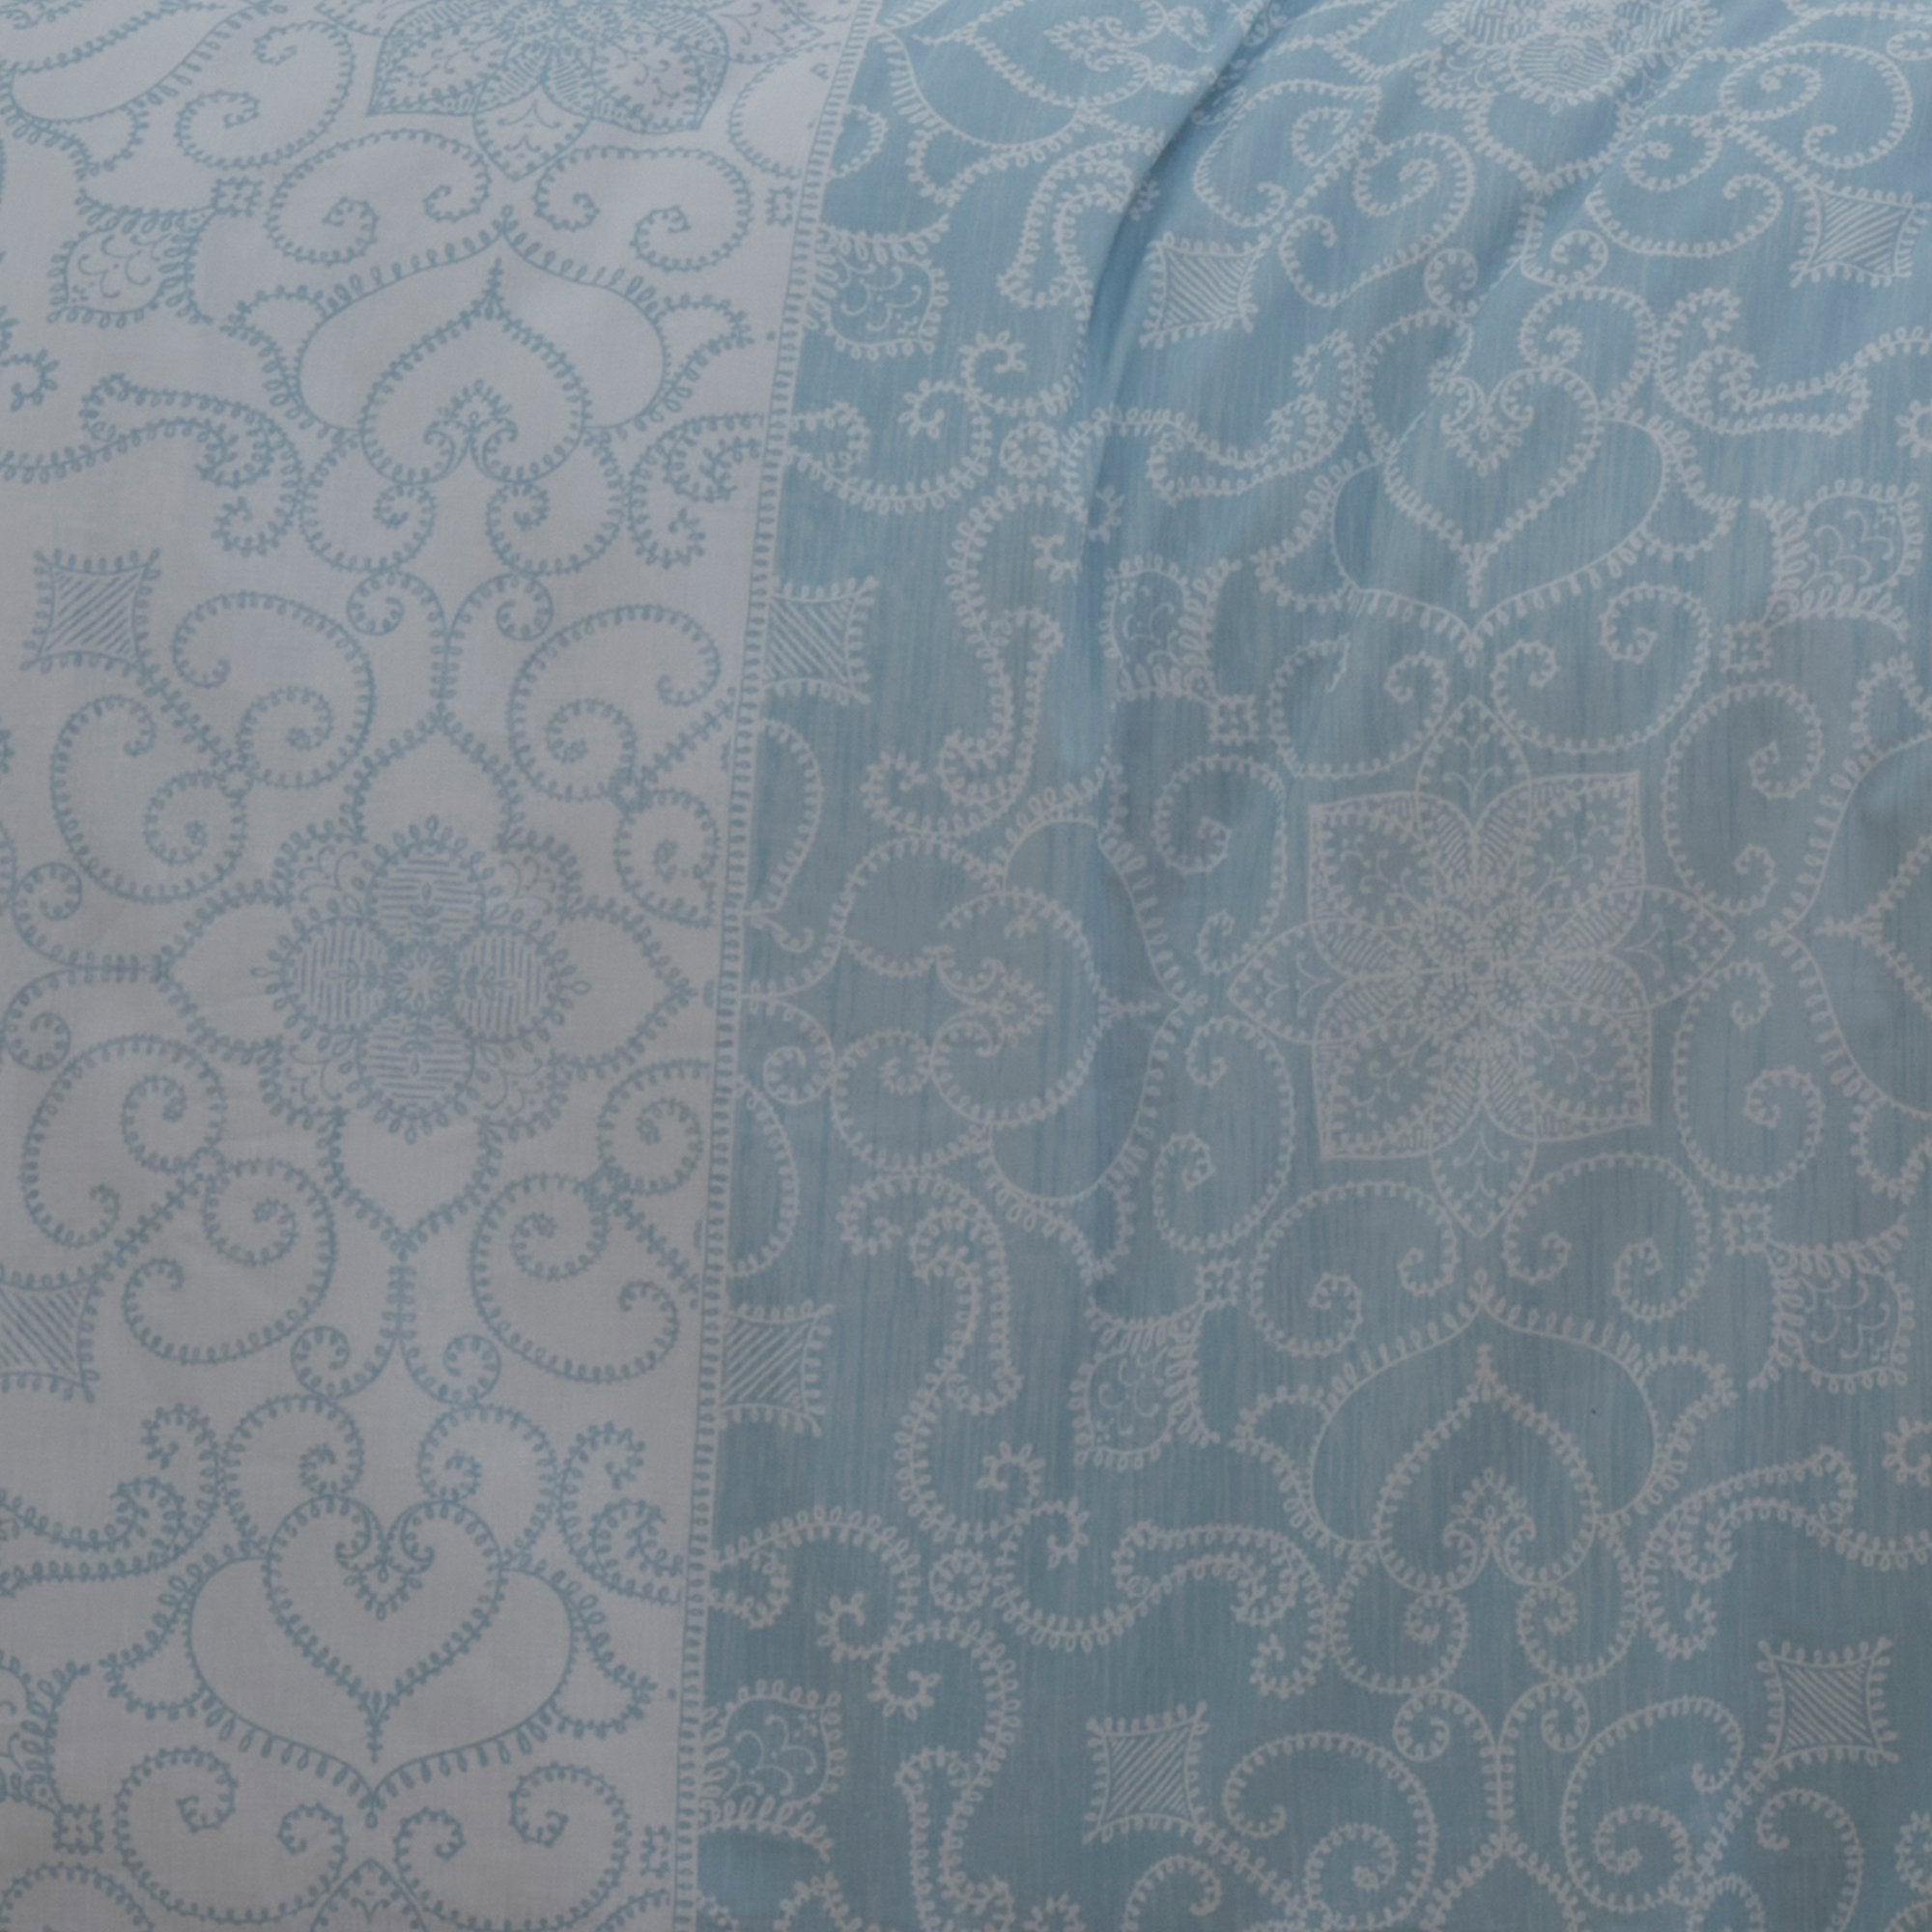 Duvet Cover Set Frampton by Dreams & Drapes Design in Blue